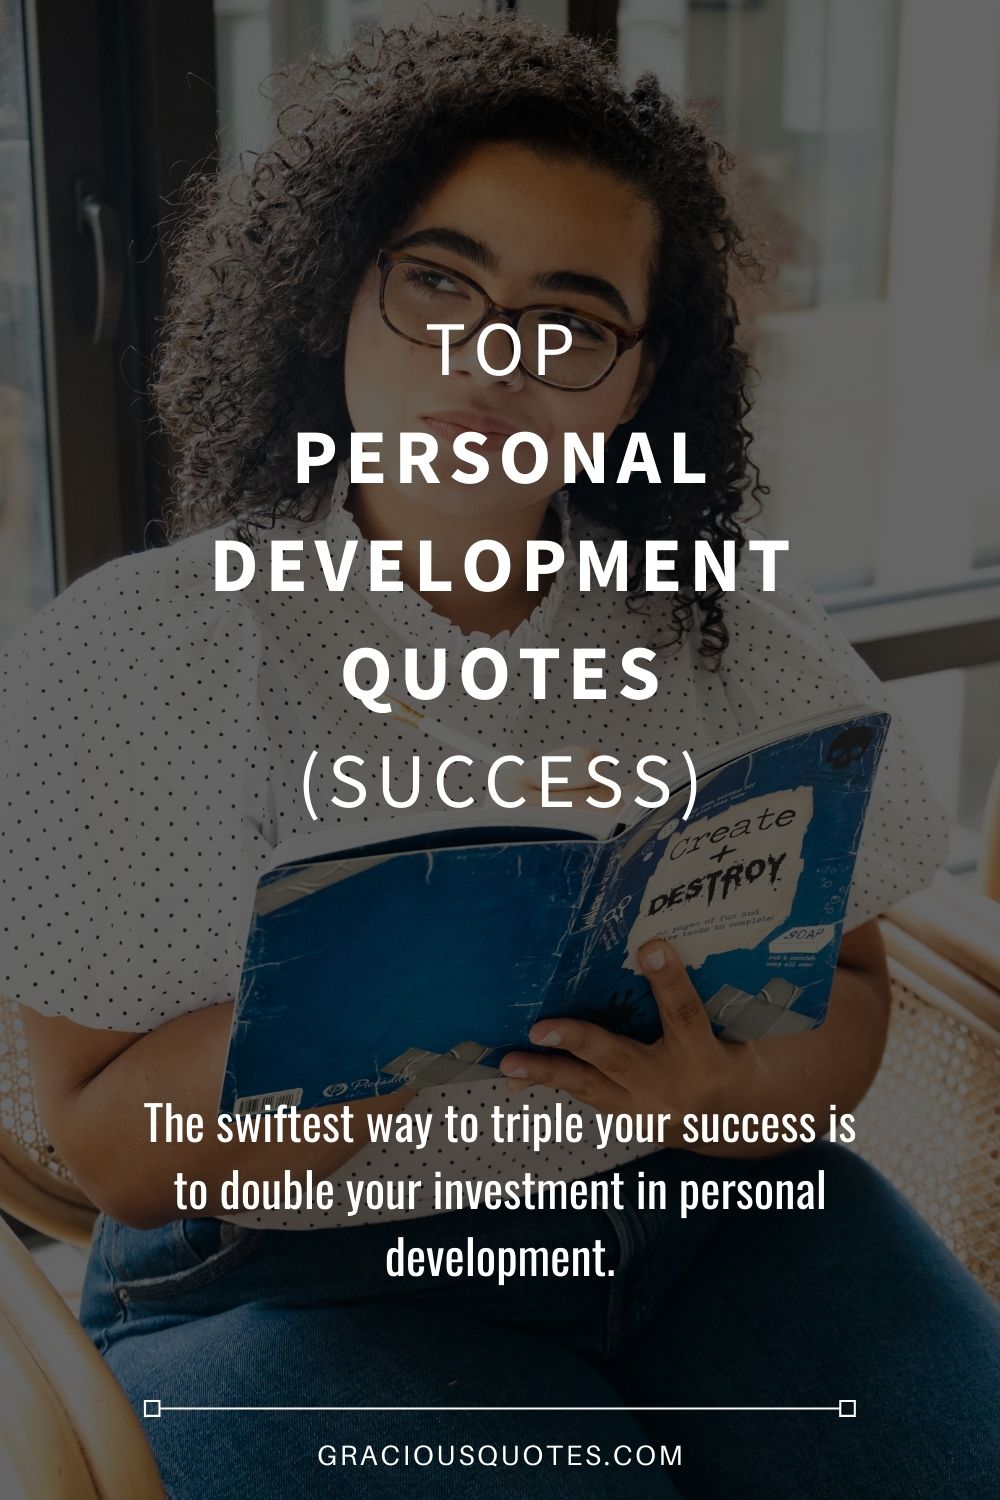 Top Personal Development Quotes (SUCCESS) - Gracious Quotes